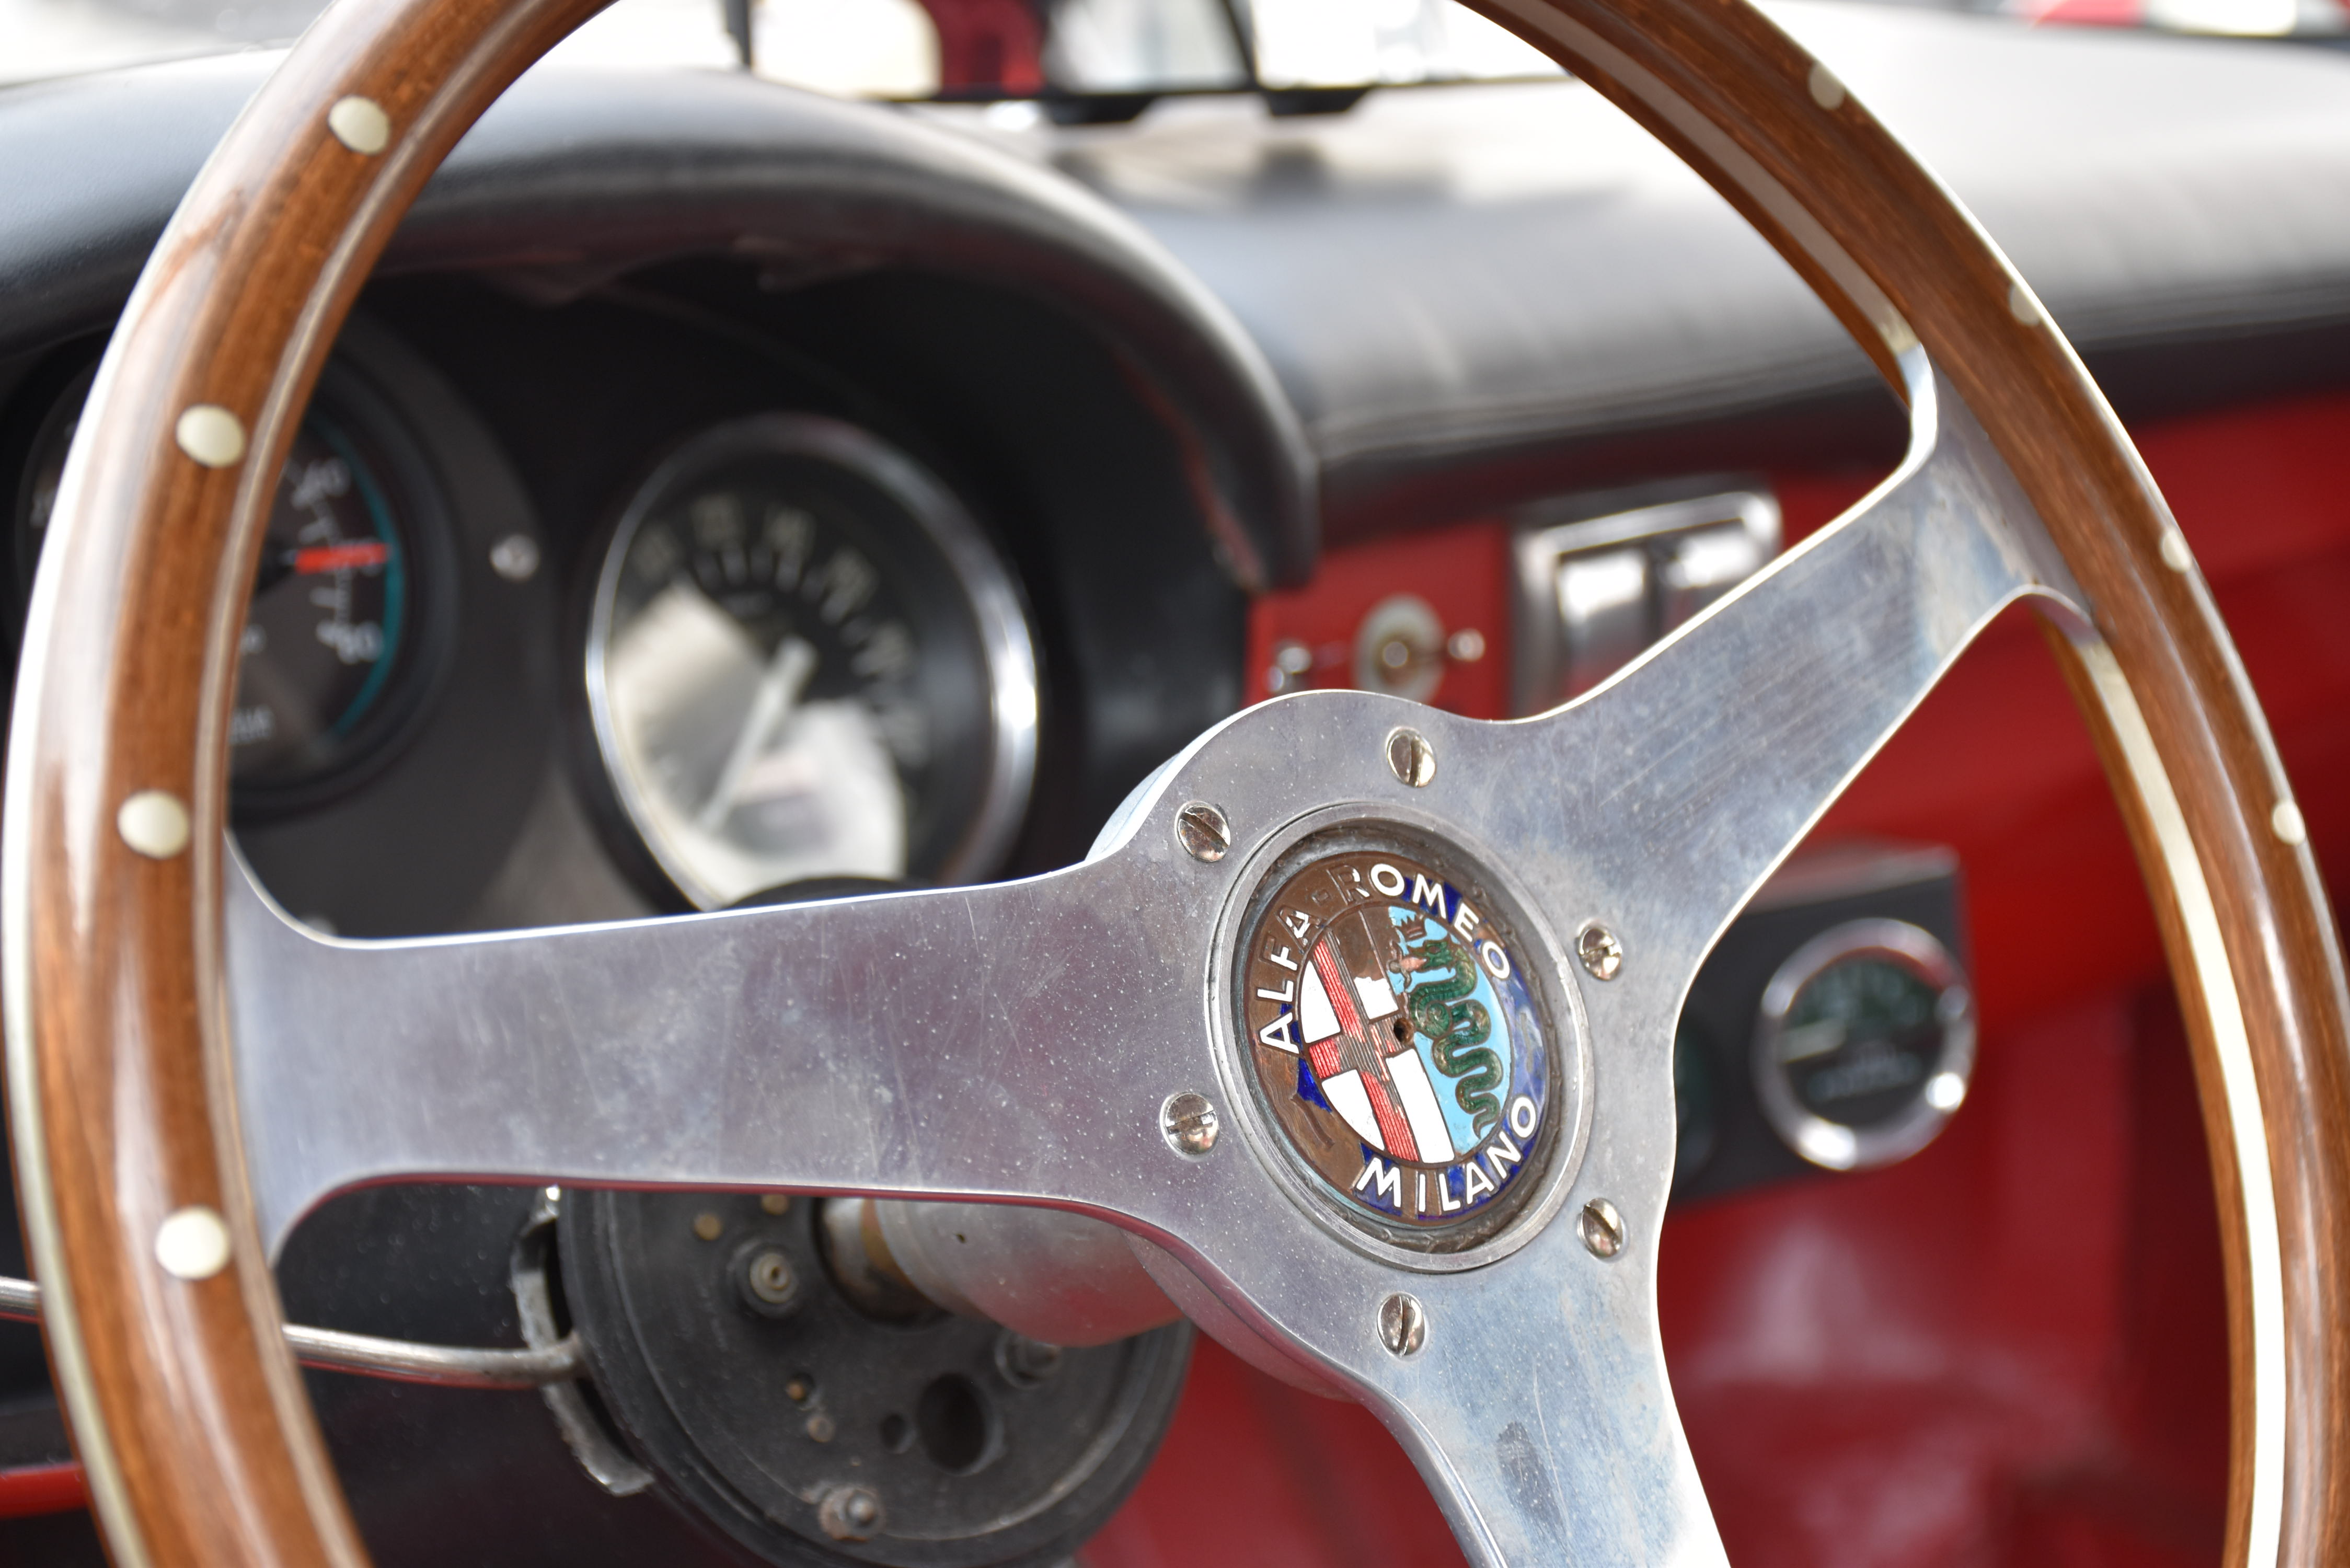 1960 Alfa Romeo Giulietta Sprint Speciale - Image 5 of 7